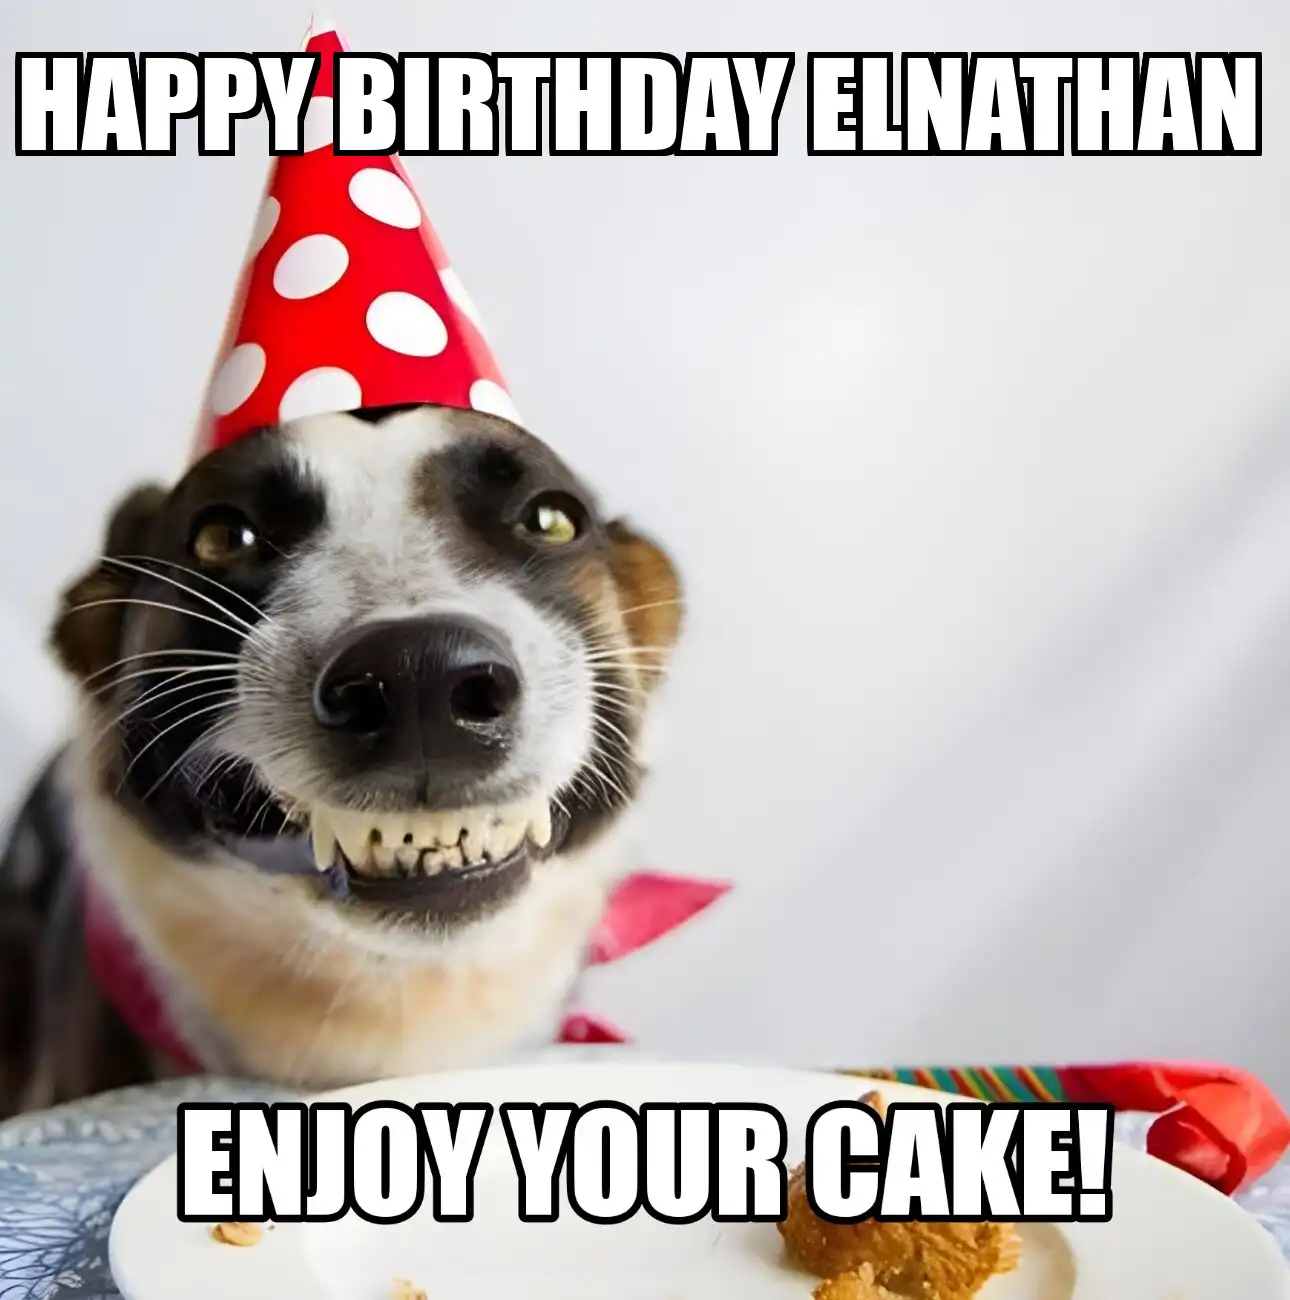 Happy Birthday Elnathan Enjoy Your Cake Dog Meme